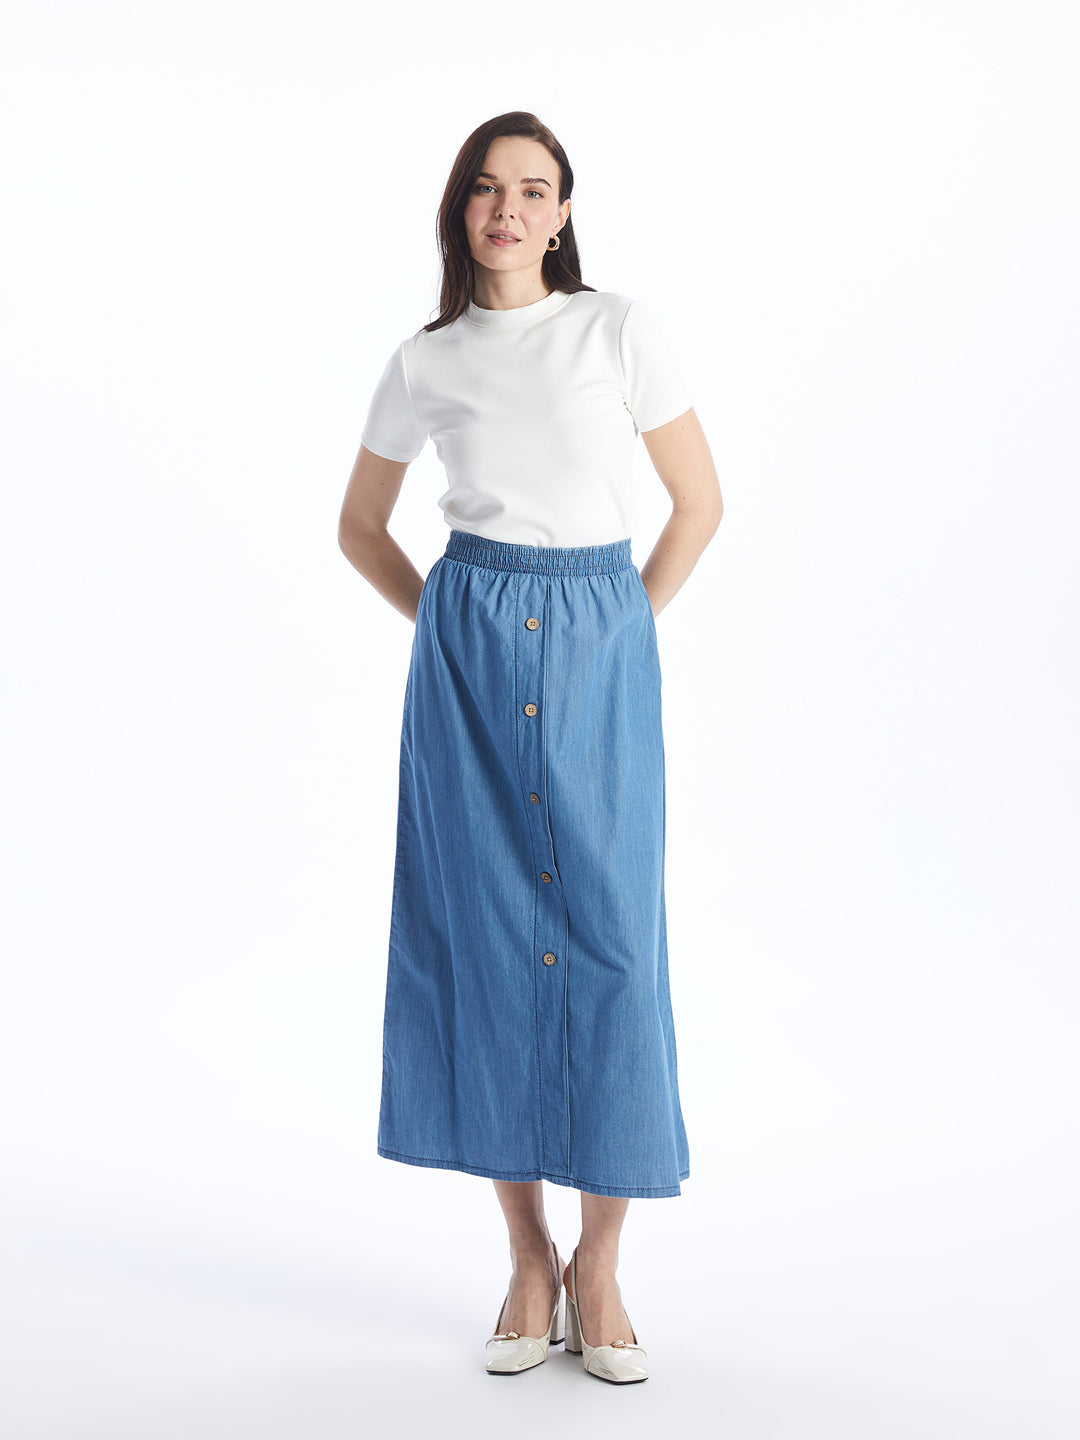 Women Elastic Waist Straight Jean Skirt